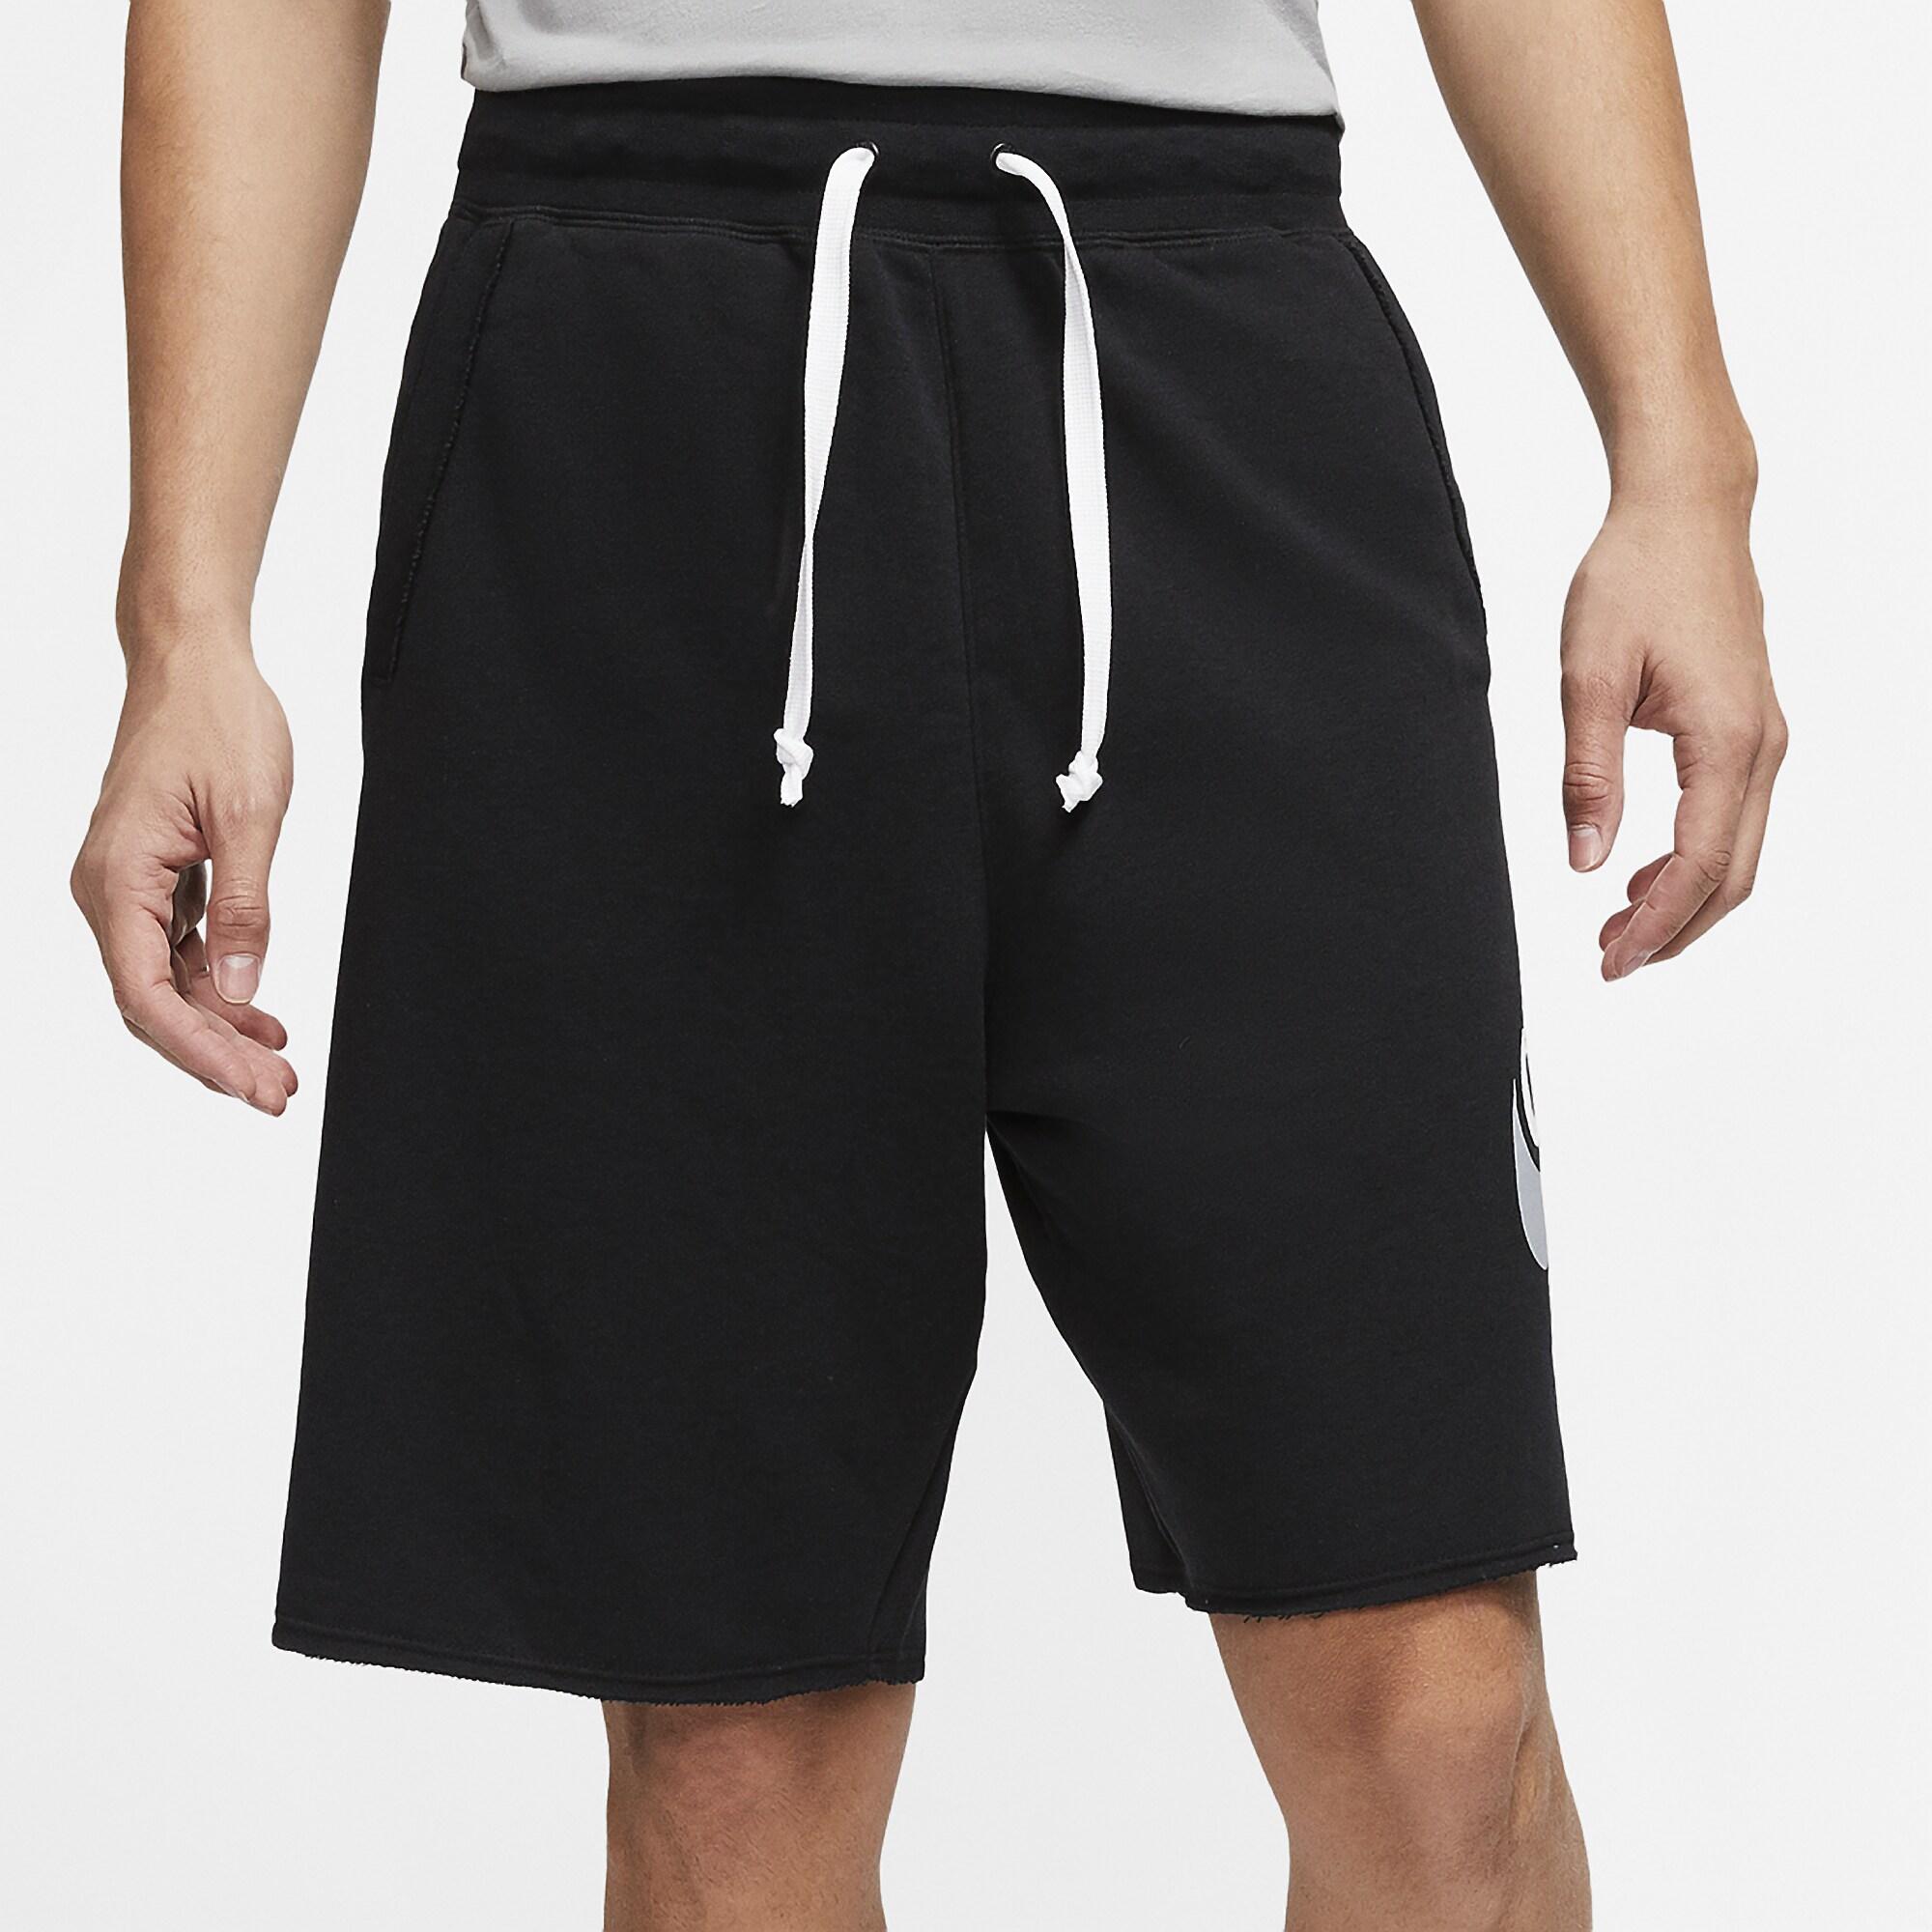 Nike Fleece Nsw Alumni City Shorts in Black/White (Black) for Men - Lyst